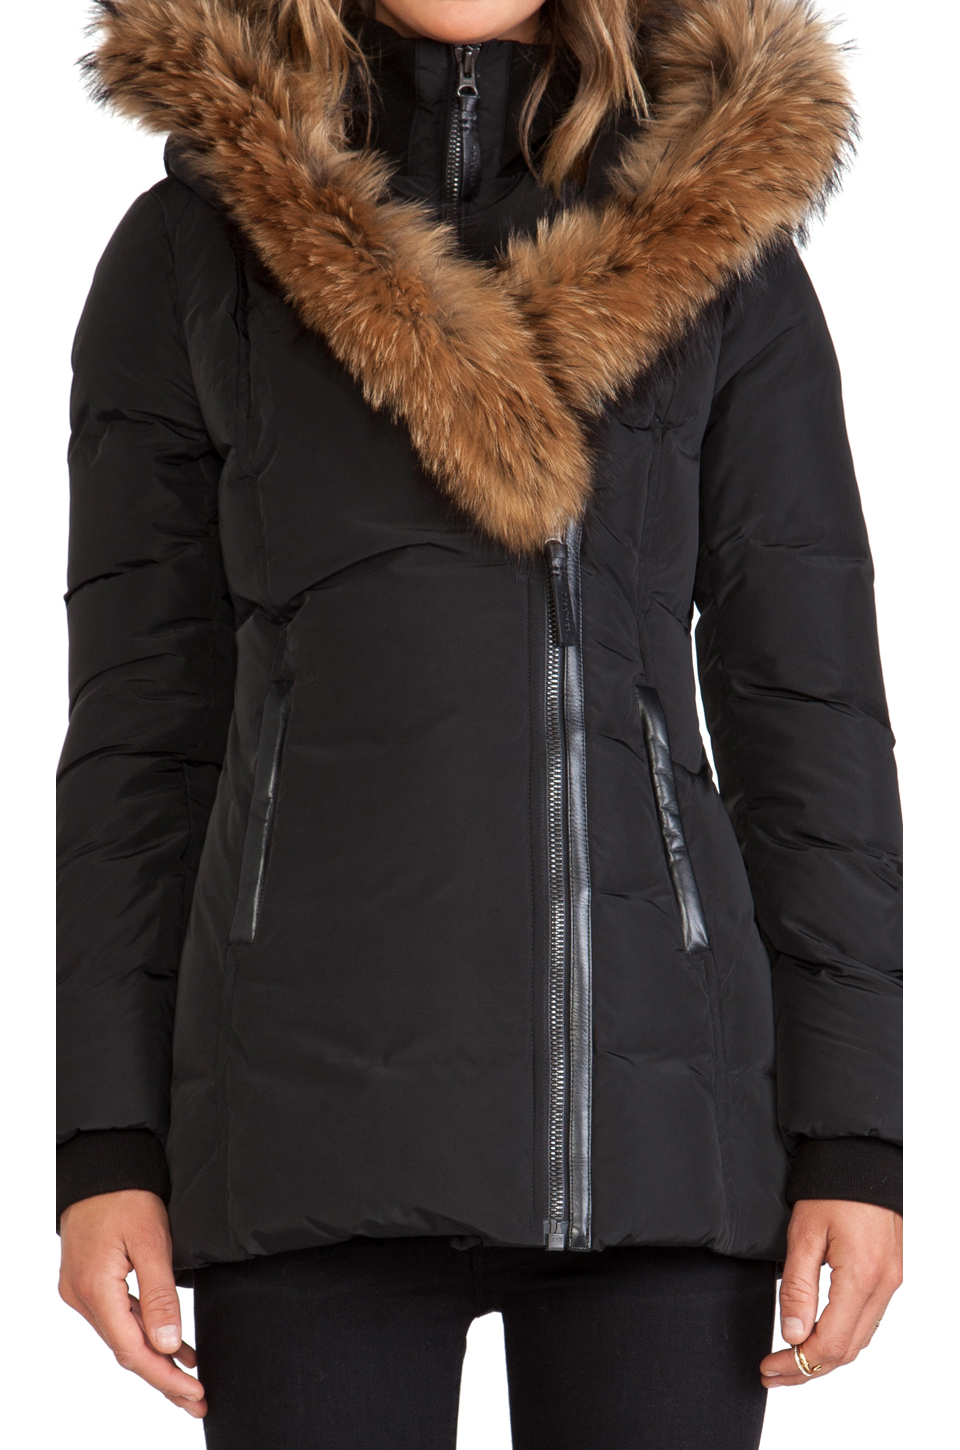 Lyst - Mackage Adali Jacket with Real Natural Fur in Black